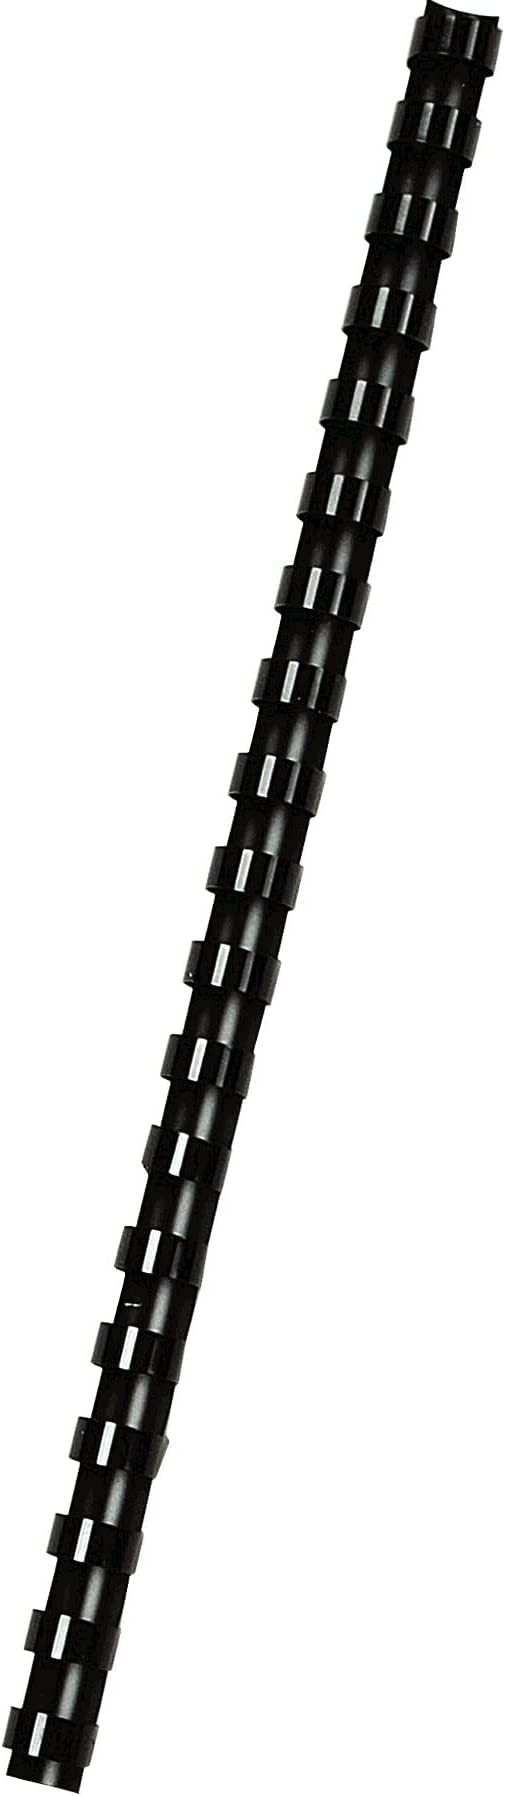 Fellowes 1/4in Black Binding Combs (25 Pack)